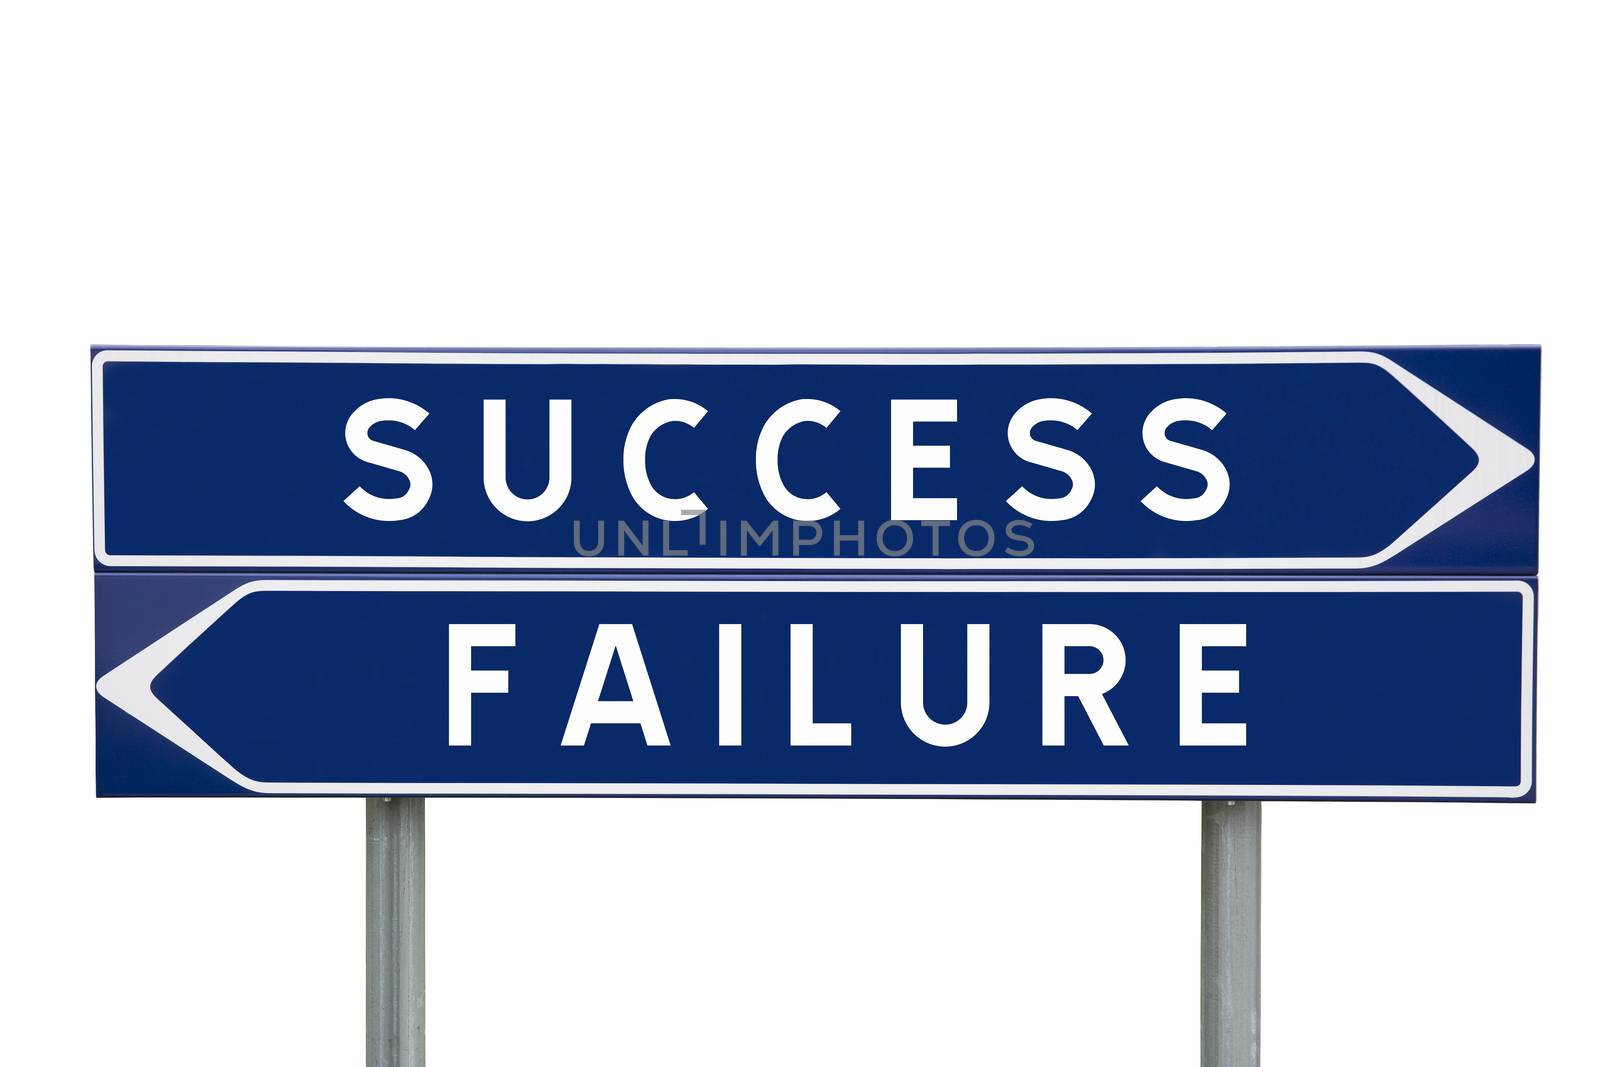 Success or Failure by gemenacom